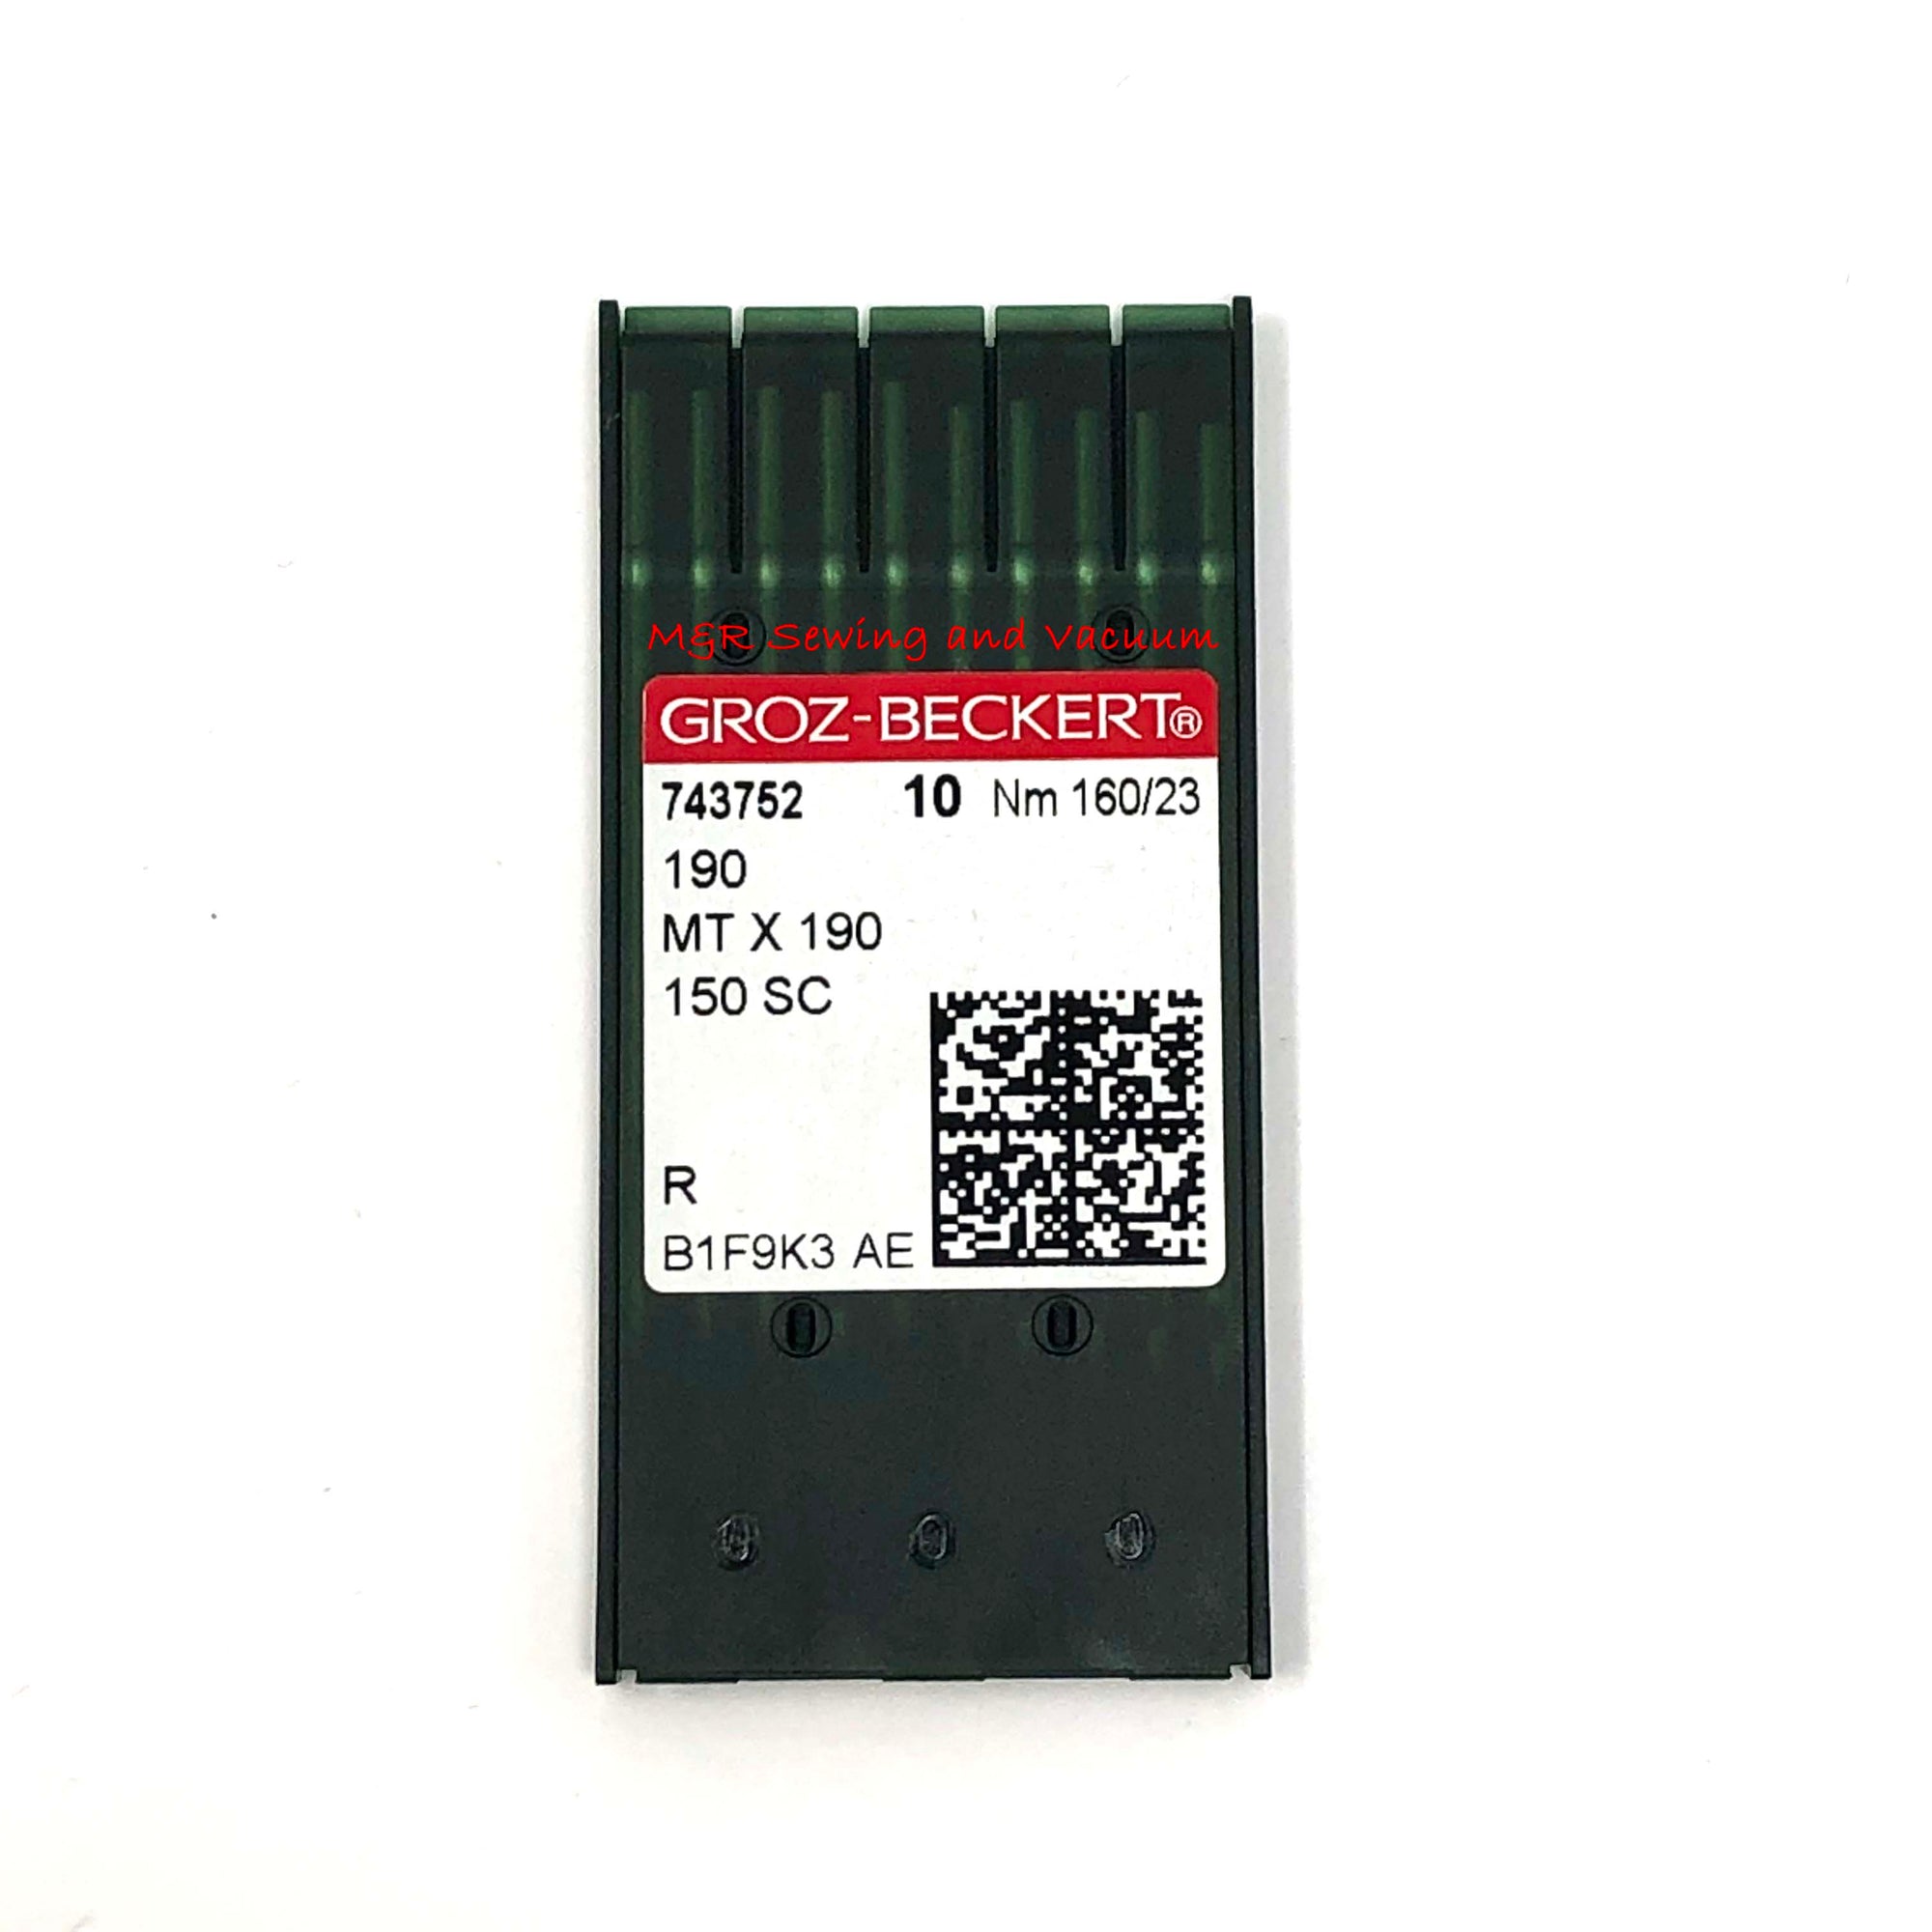 Groz-Beckert MTx190 Industrial Needles - 160/23